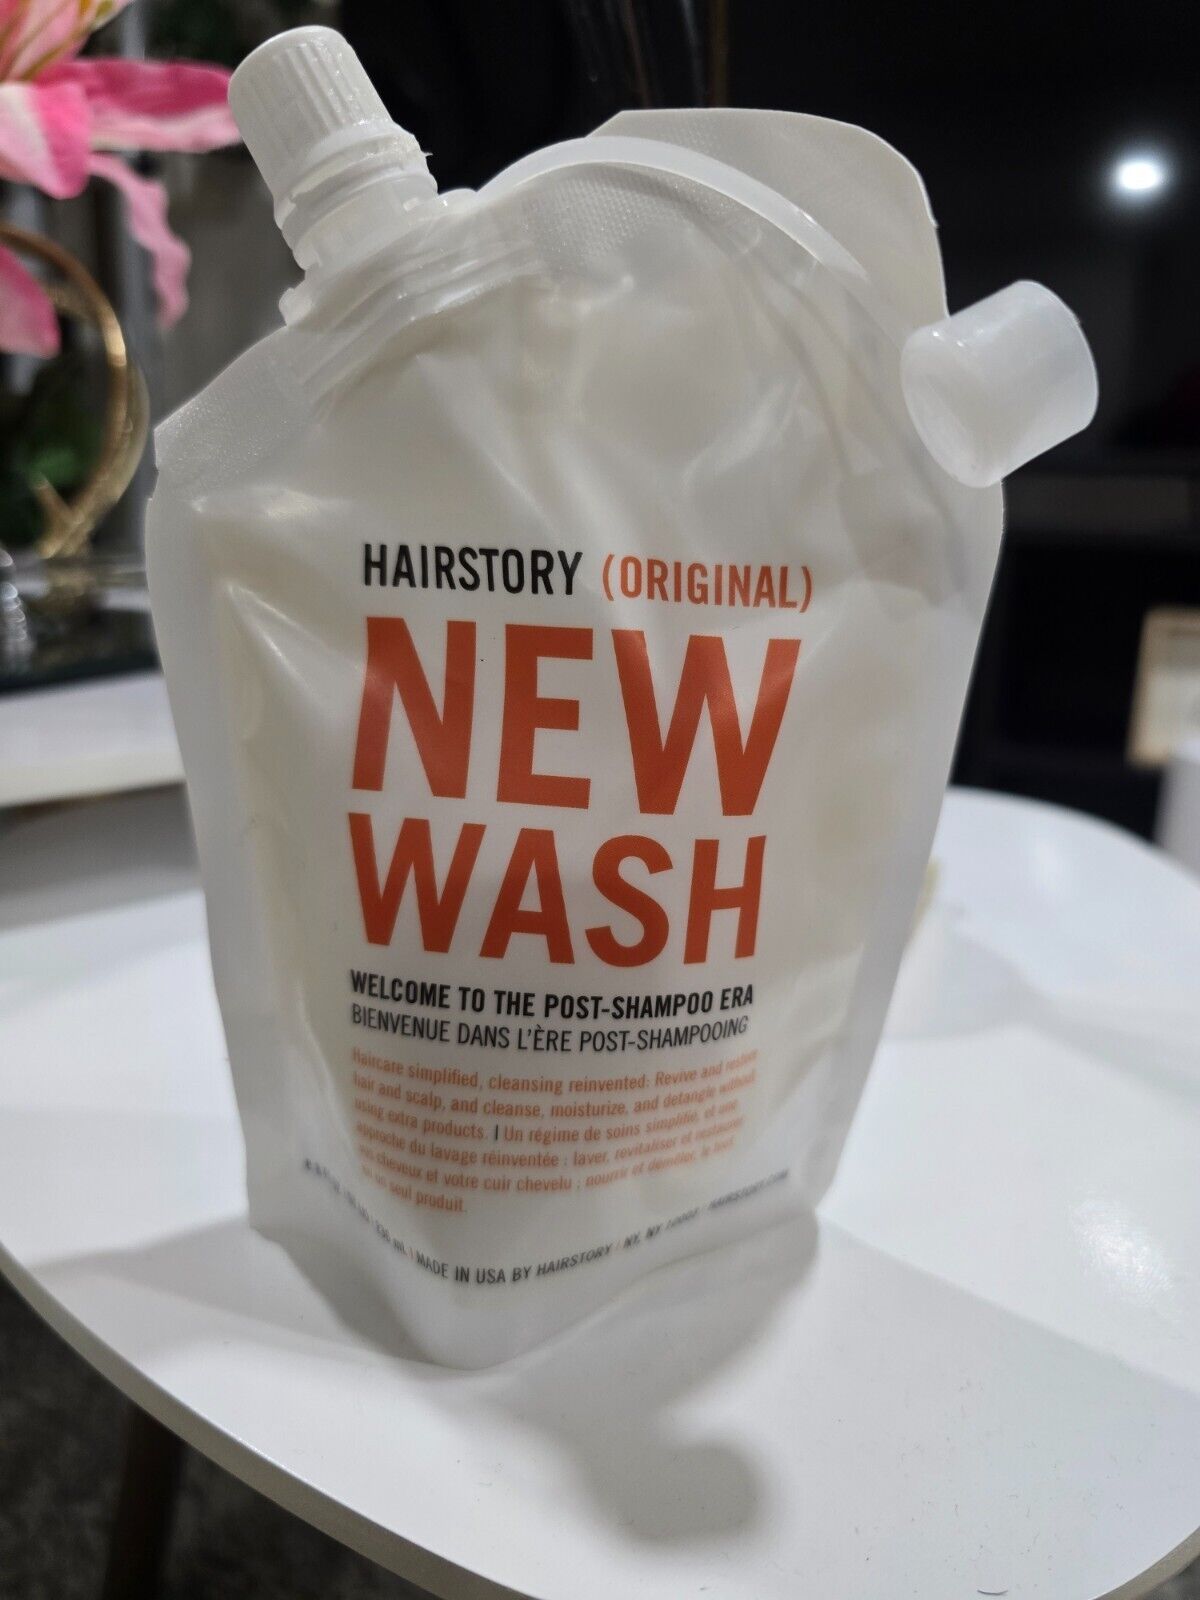 New wash hairstory original post-shampoo era 8oz fast shipping